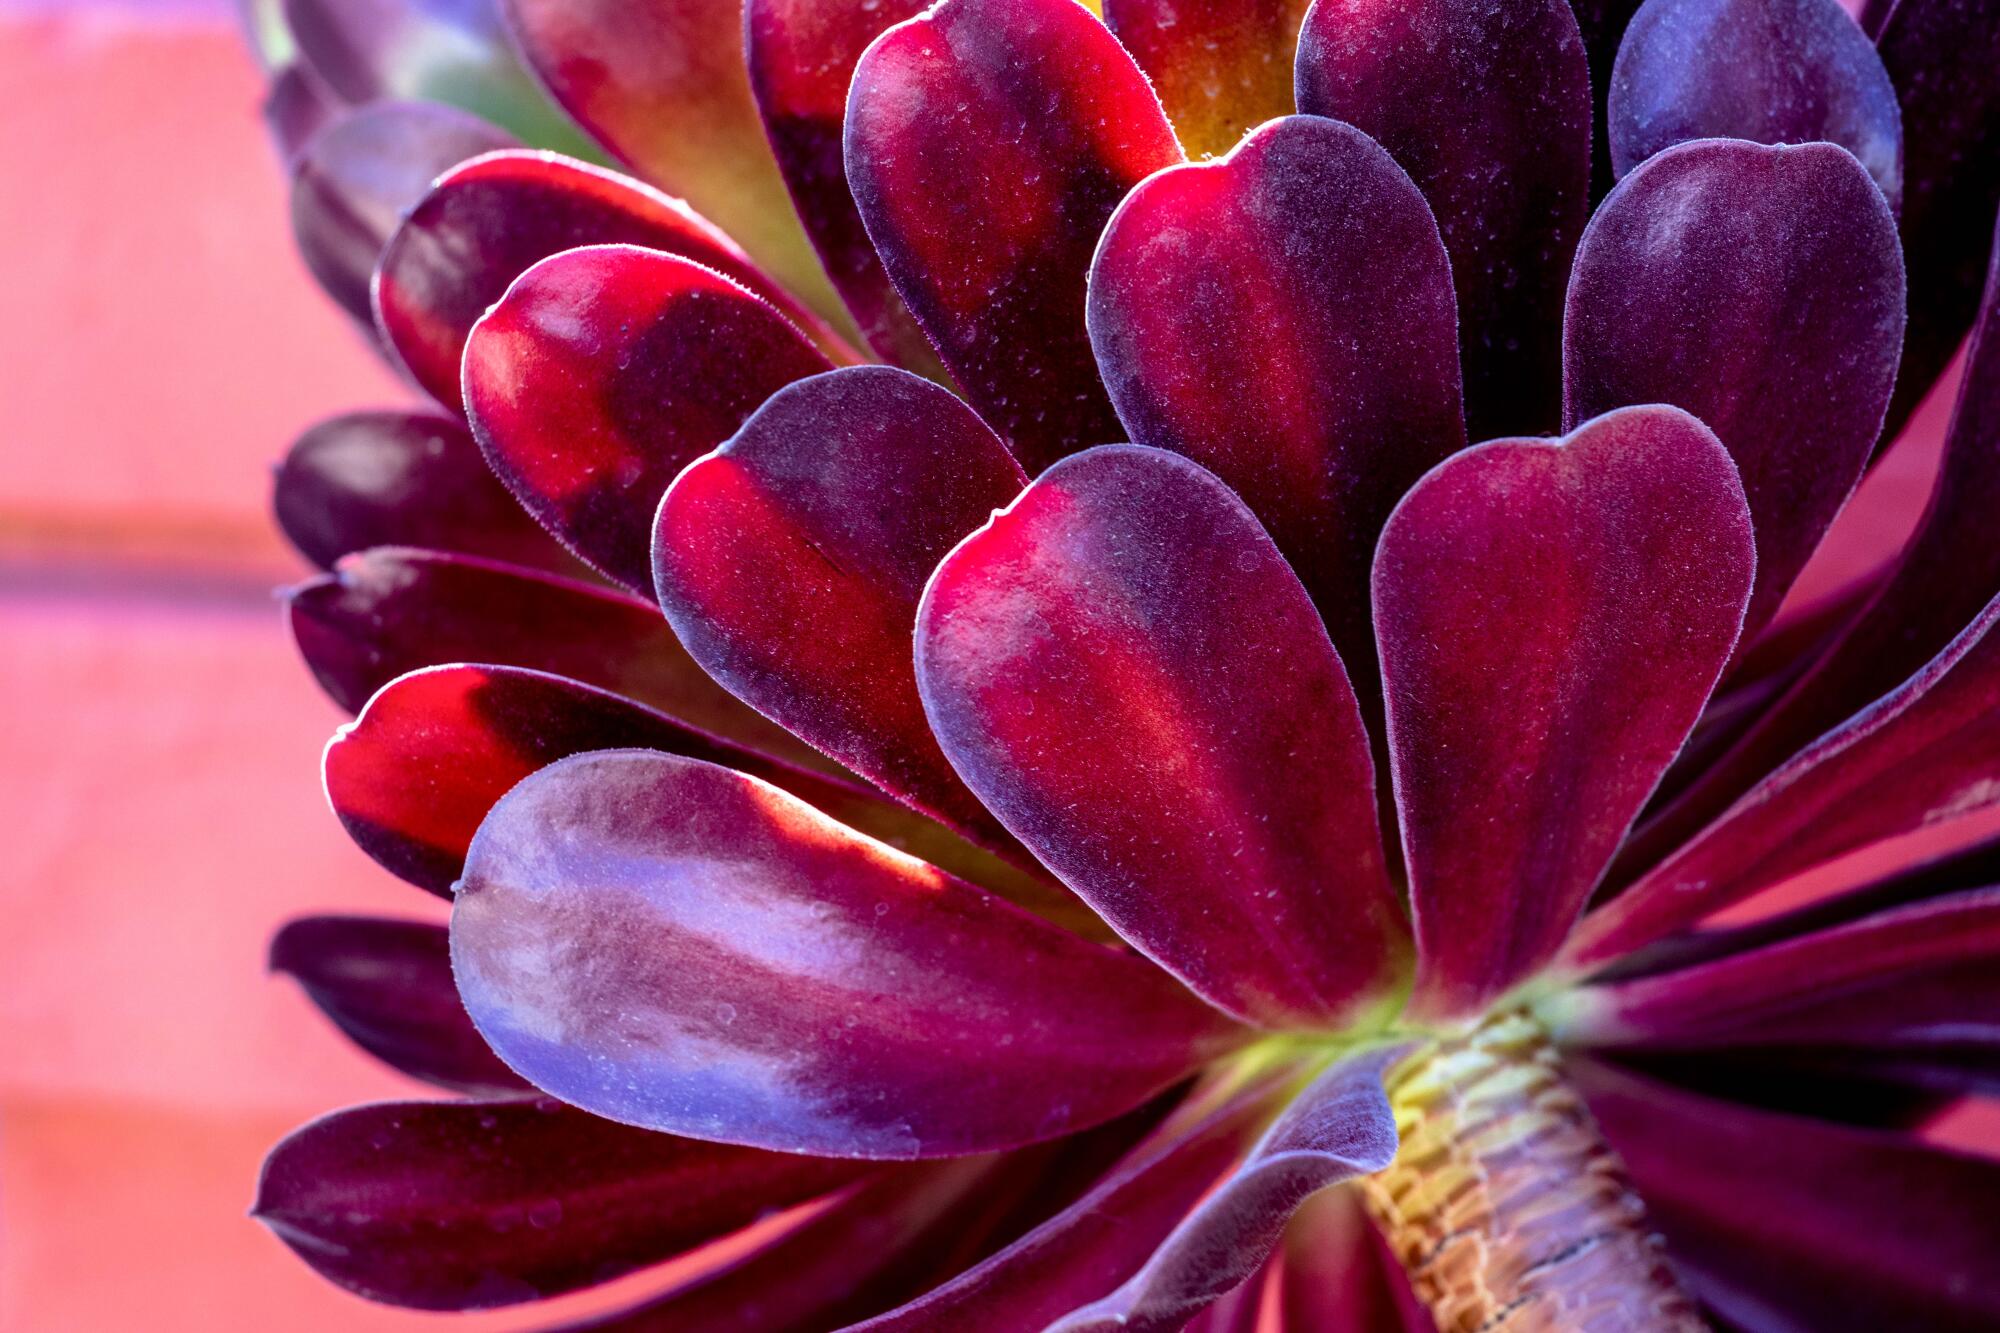 A purple succulent up close